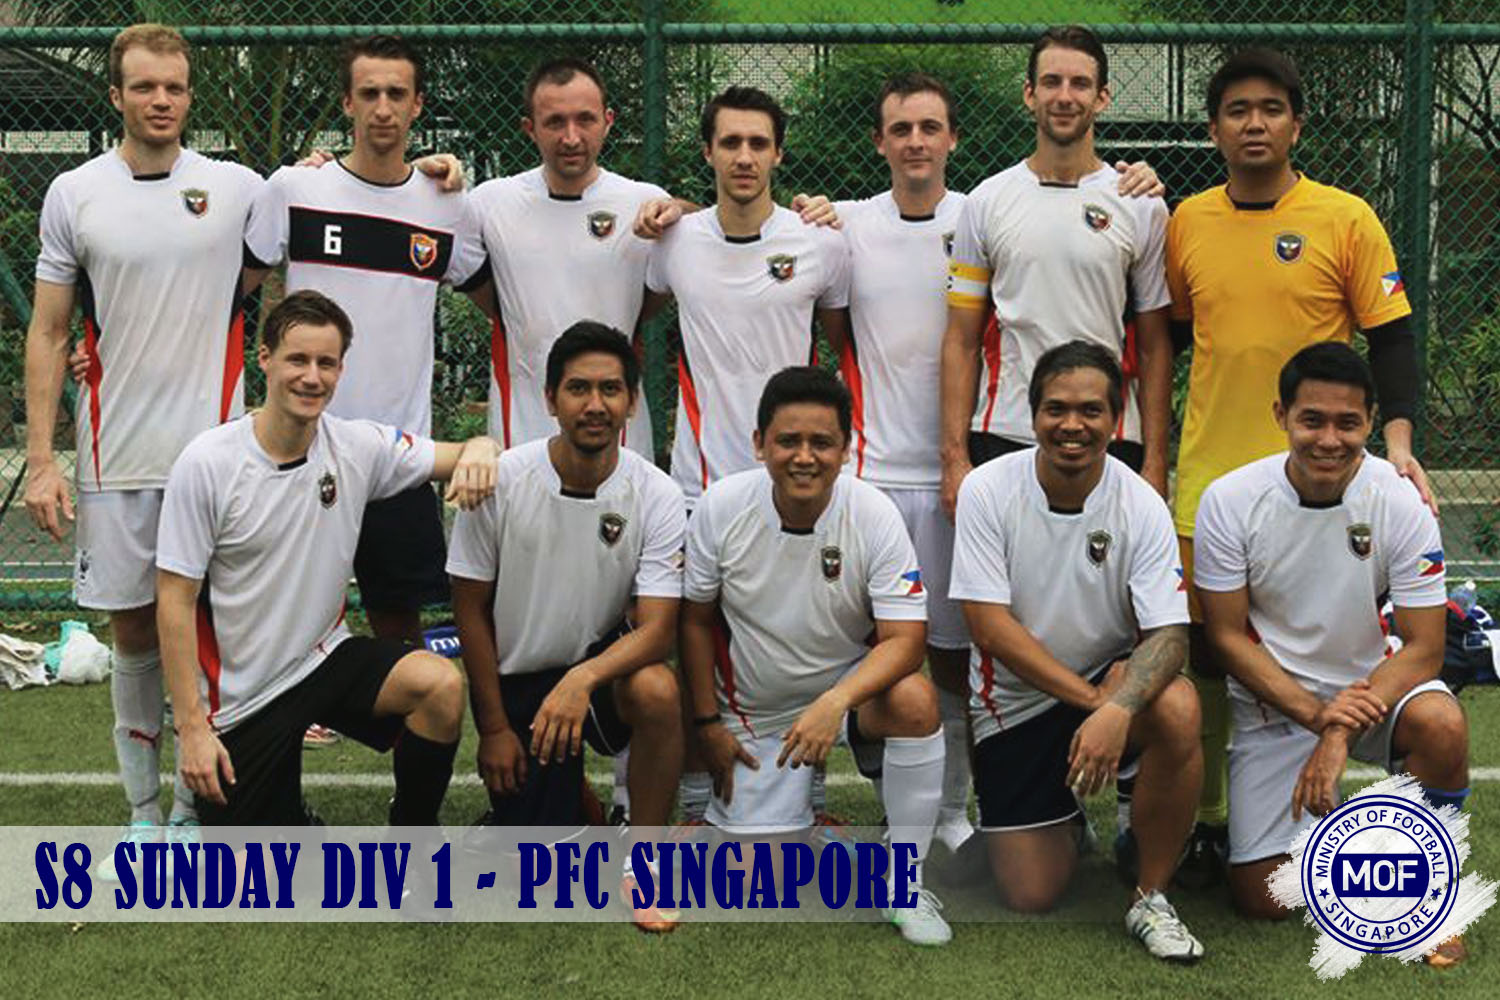 PFC Singapore